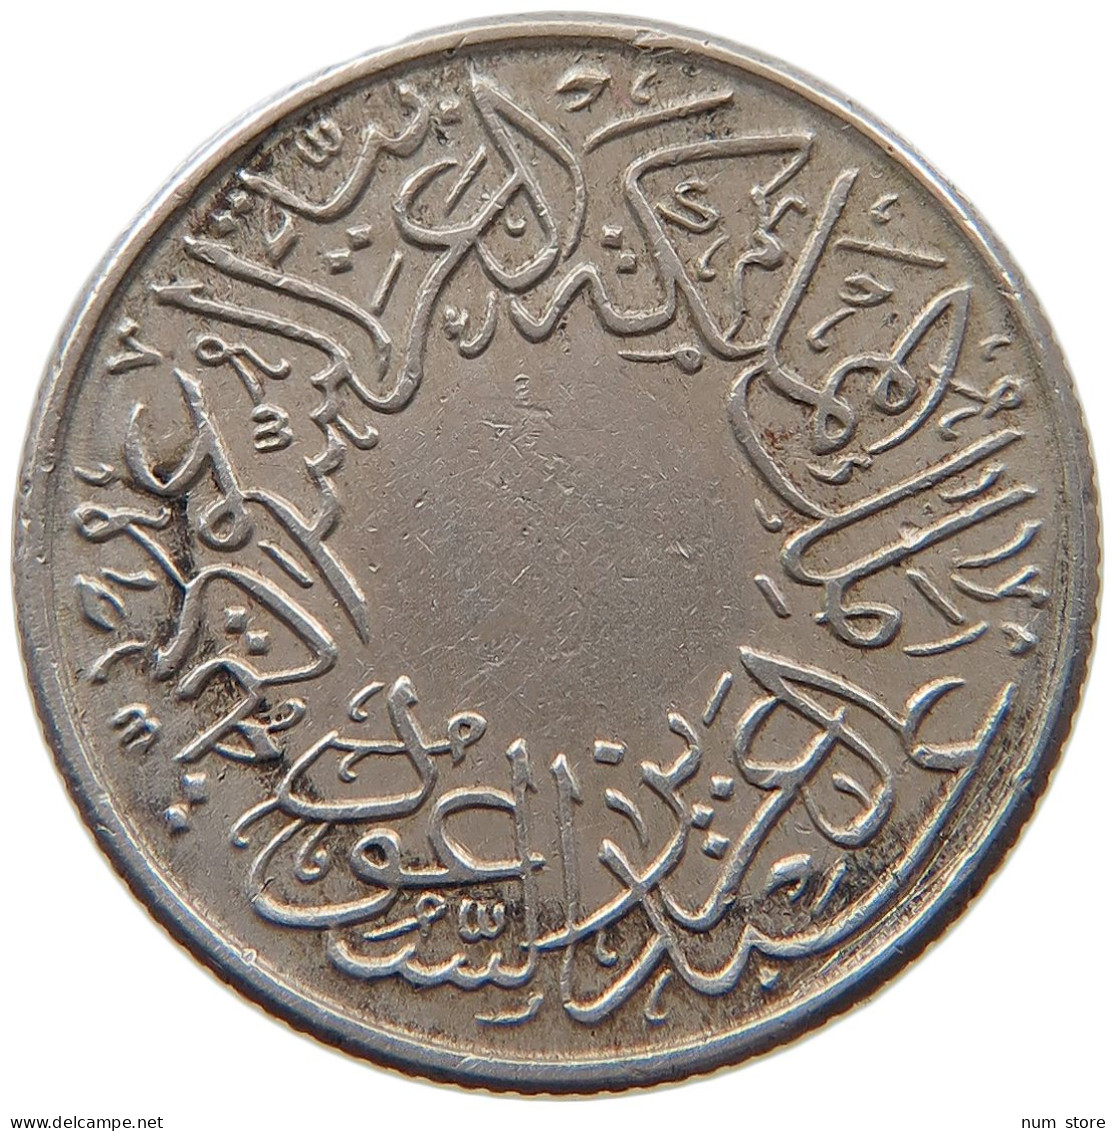 SAUDI ARABIA 1/2 GHIRSH 1356  #MA 063950 - Saudi Arabia